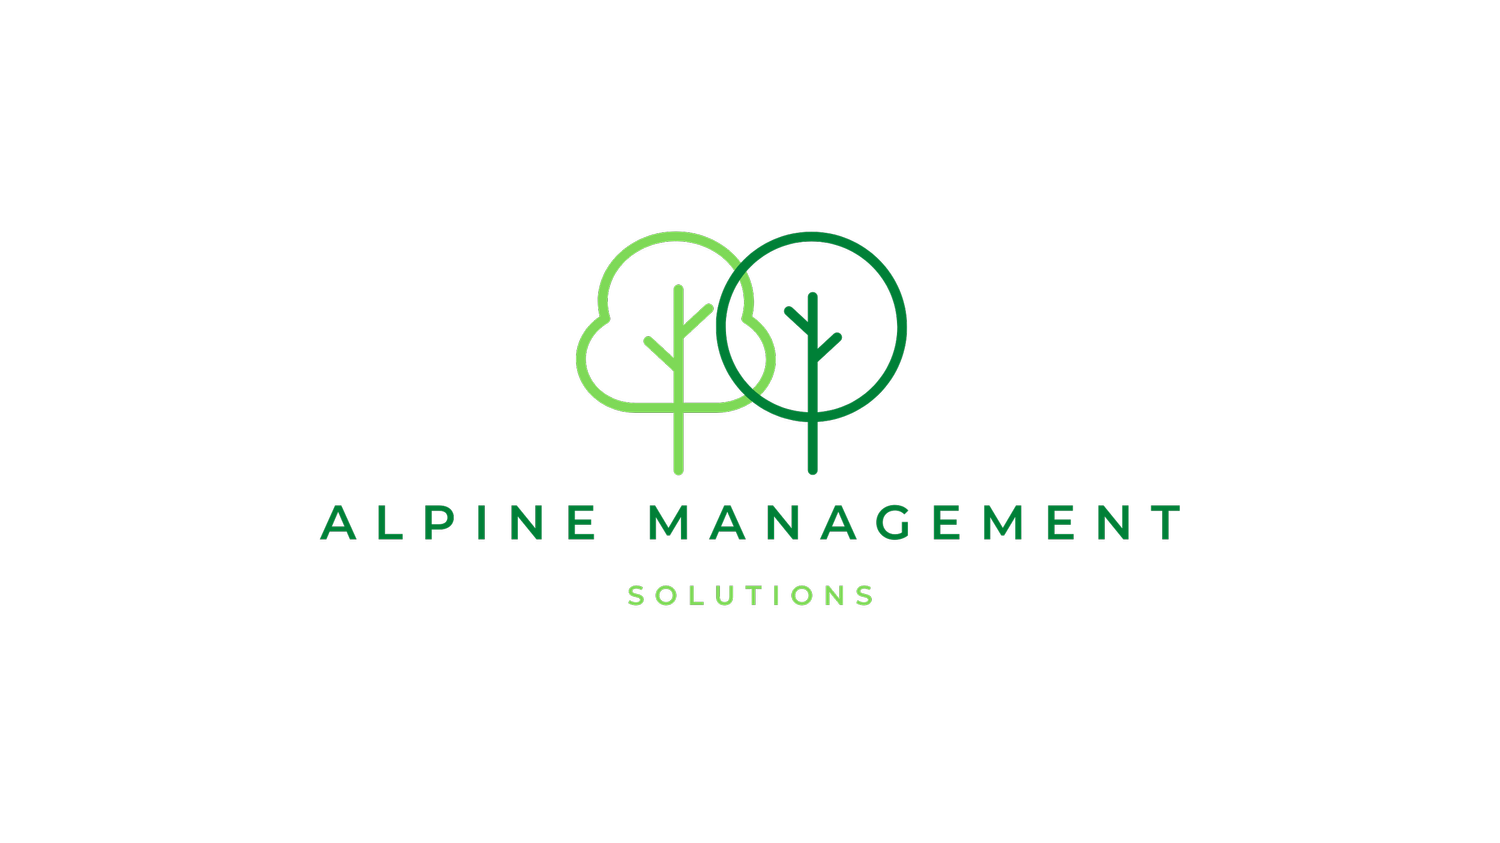 Alpine Management Solutions